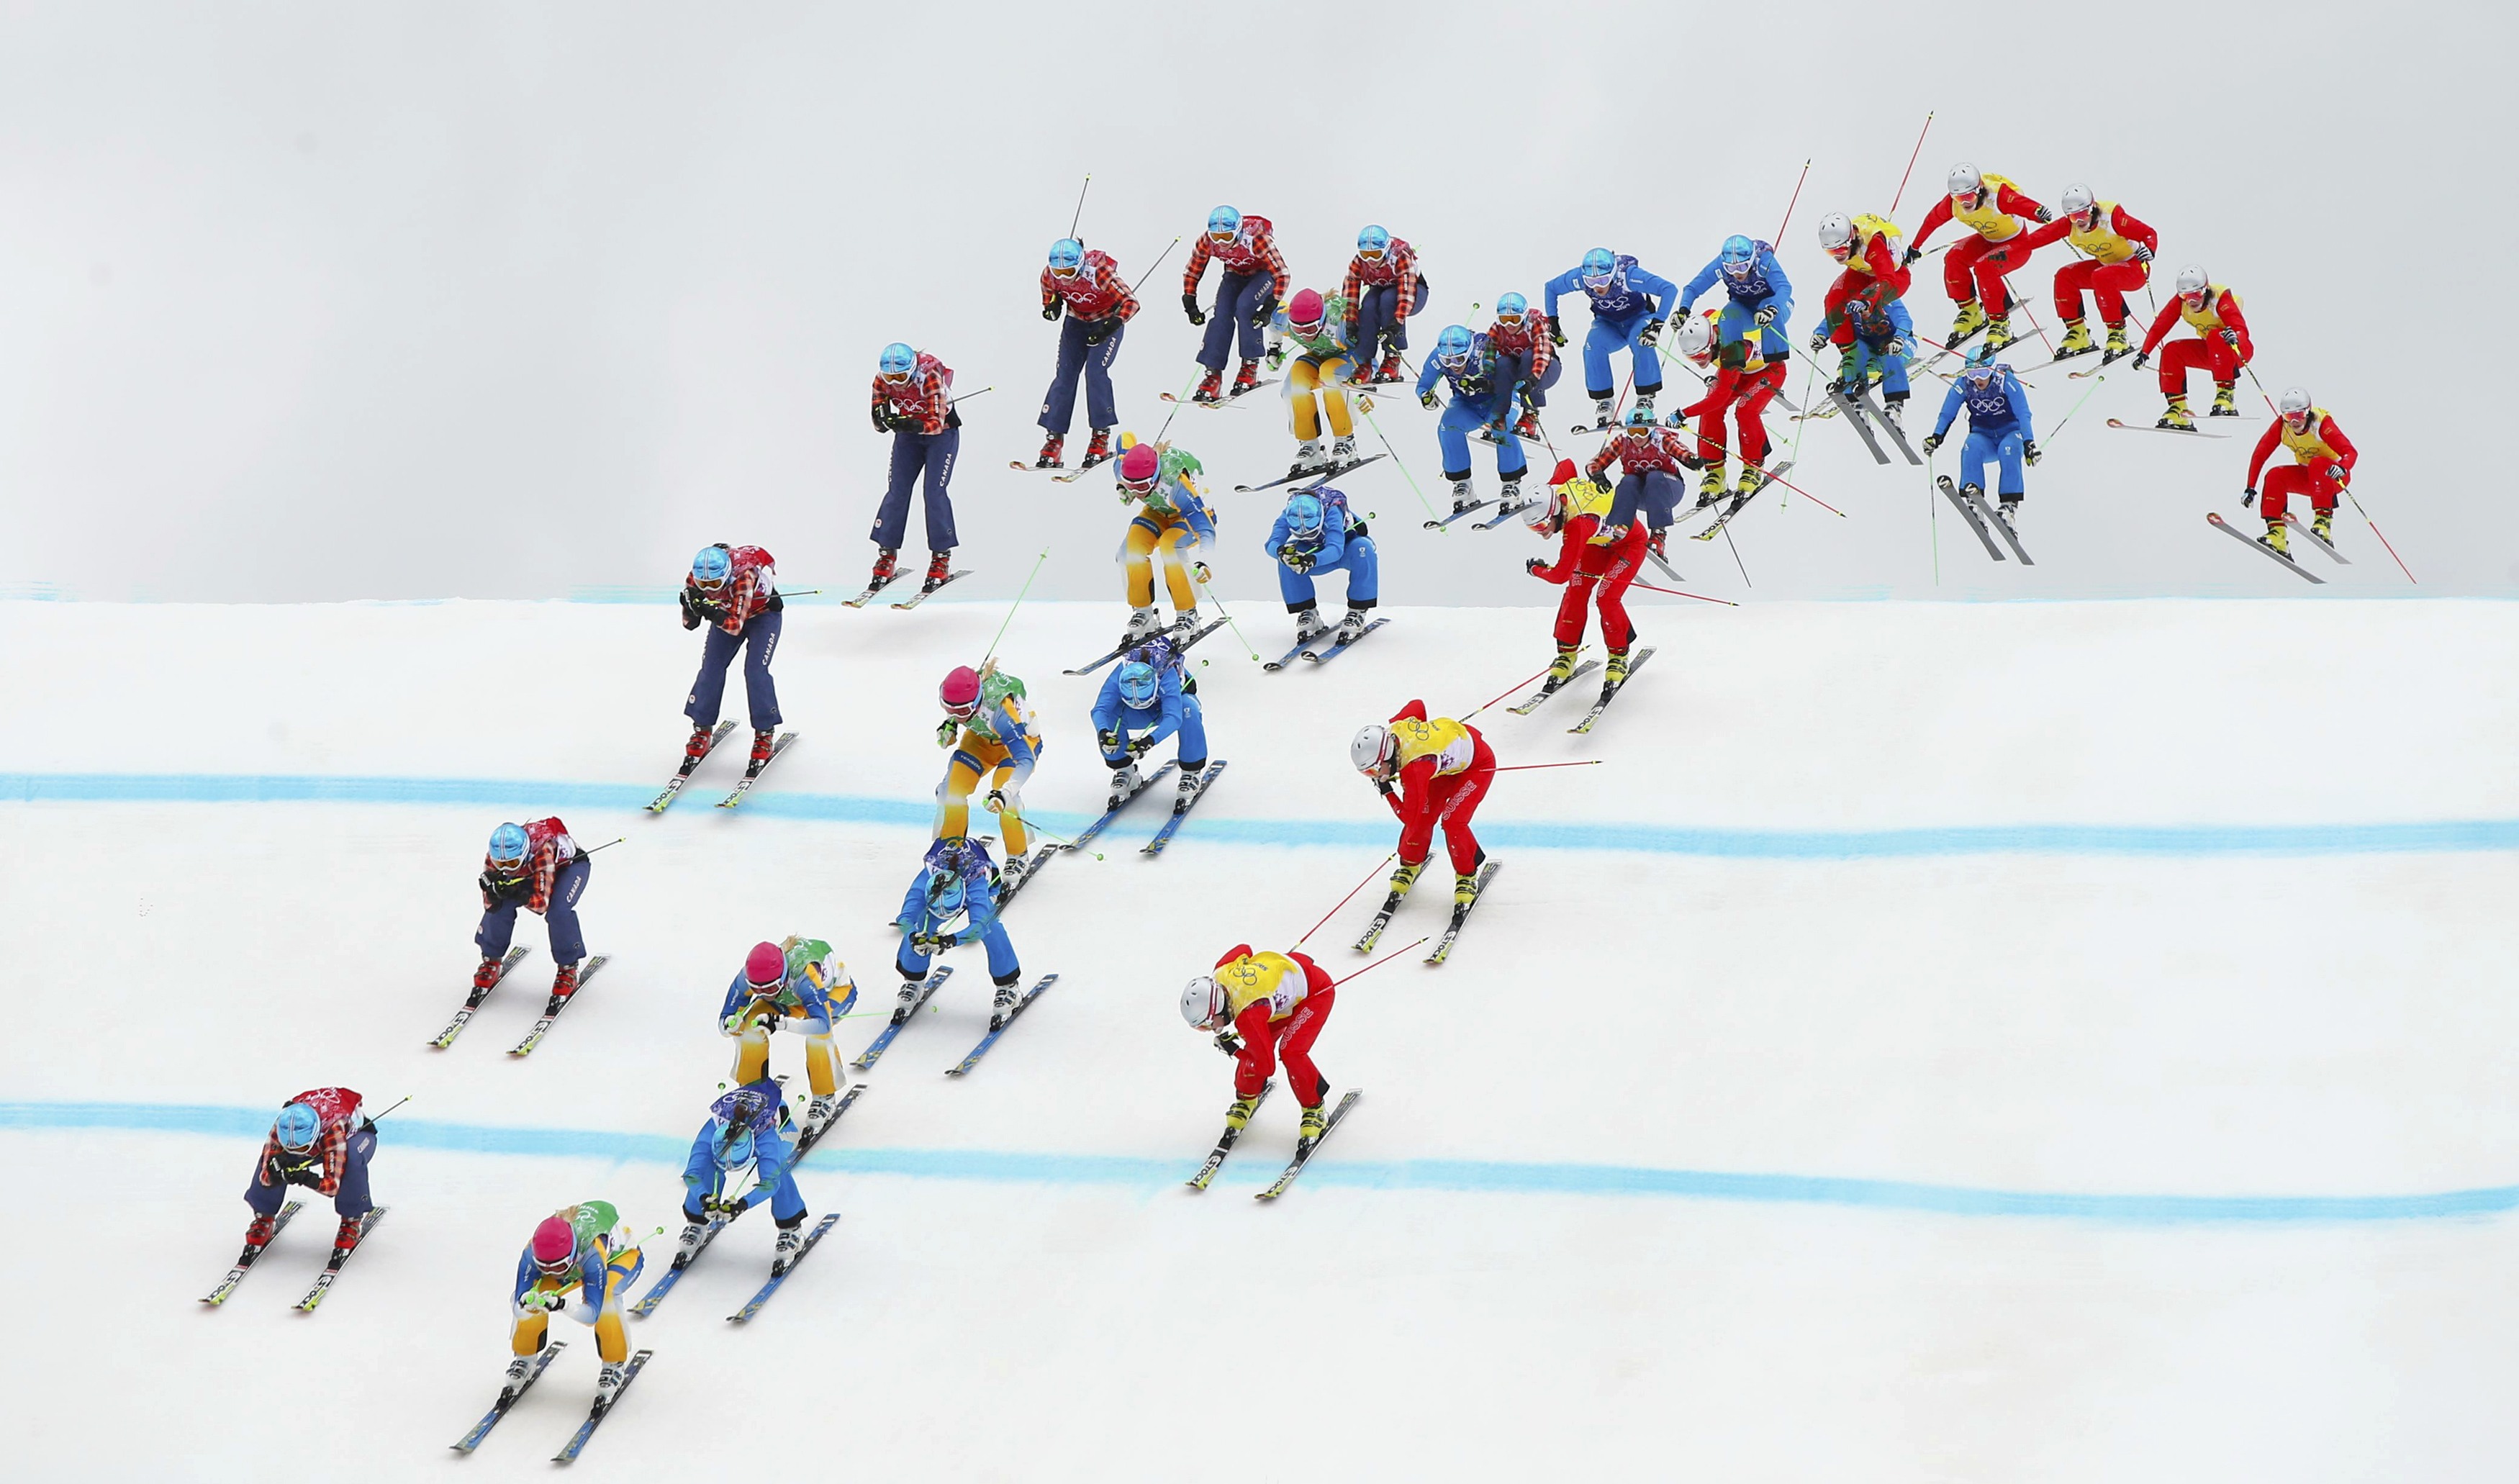 High Resolution Wallpaper | Winter Olympics 3500x2062 px